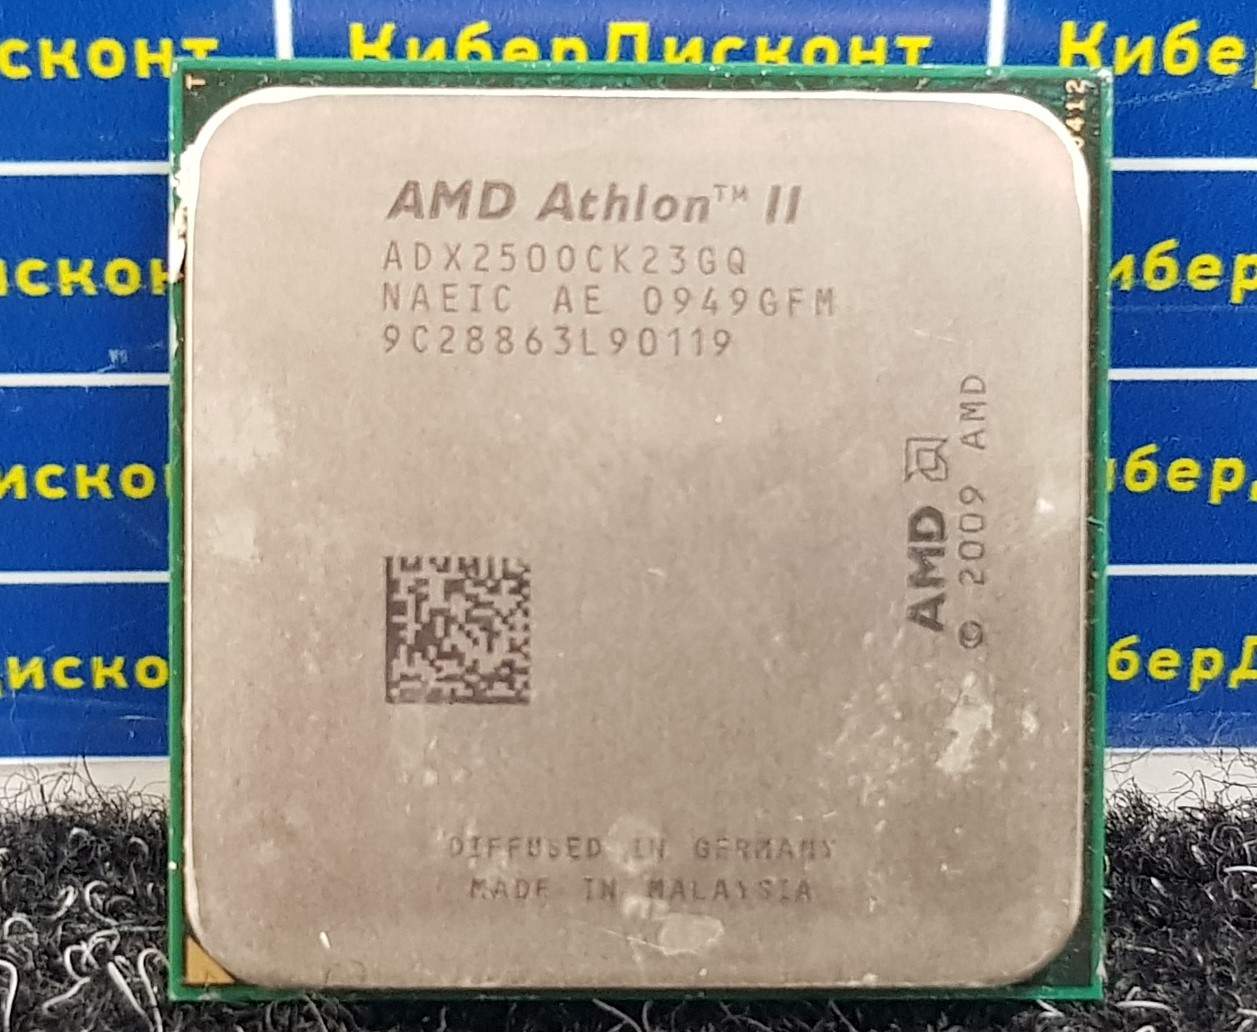 Athlon x2 сокет. Athlon II x2 250 сокет. Процессор AMD Athlon 2 x2. AMD Athlon 2 x2 250 Processor. Процессор АМД Атлон 2.